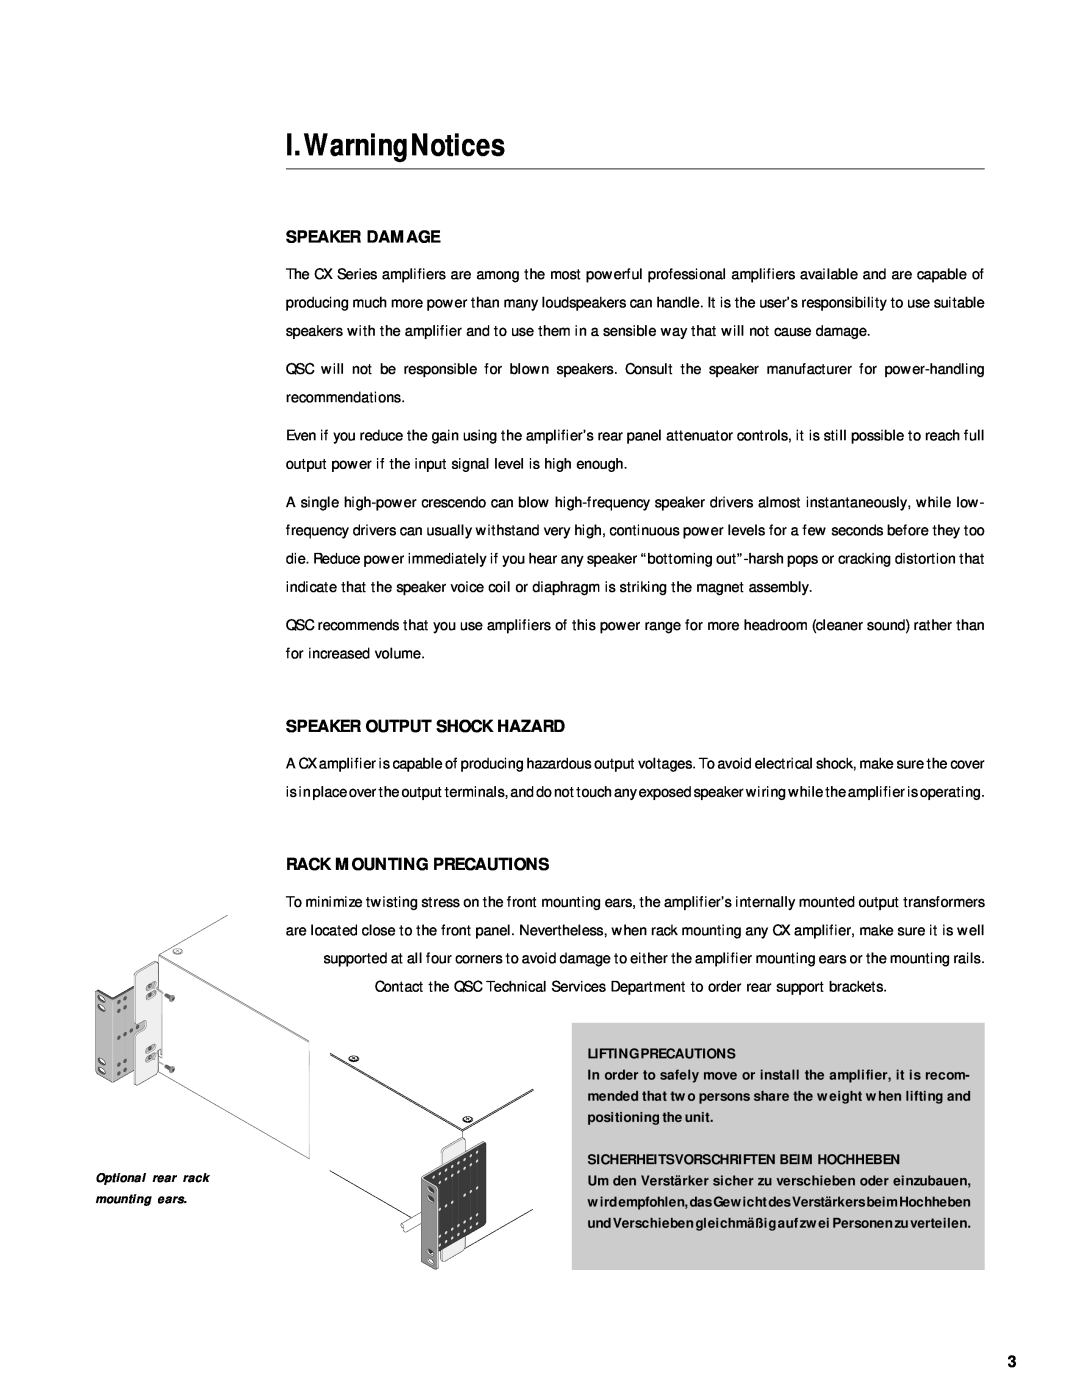 QSC Audio CX Series user manual I. Warning Notices, Speaker Damage, Speaker Output Shock Hazard, Rack Mounting Precautions 